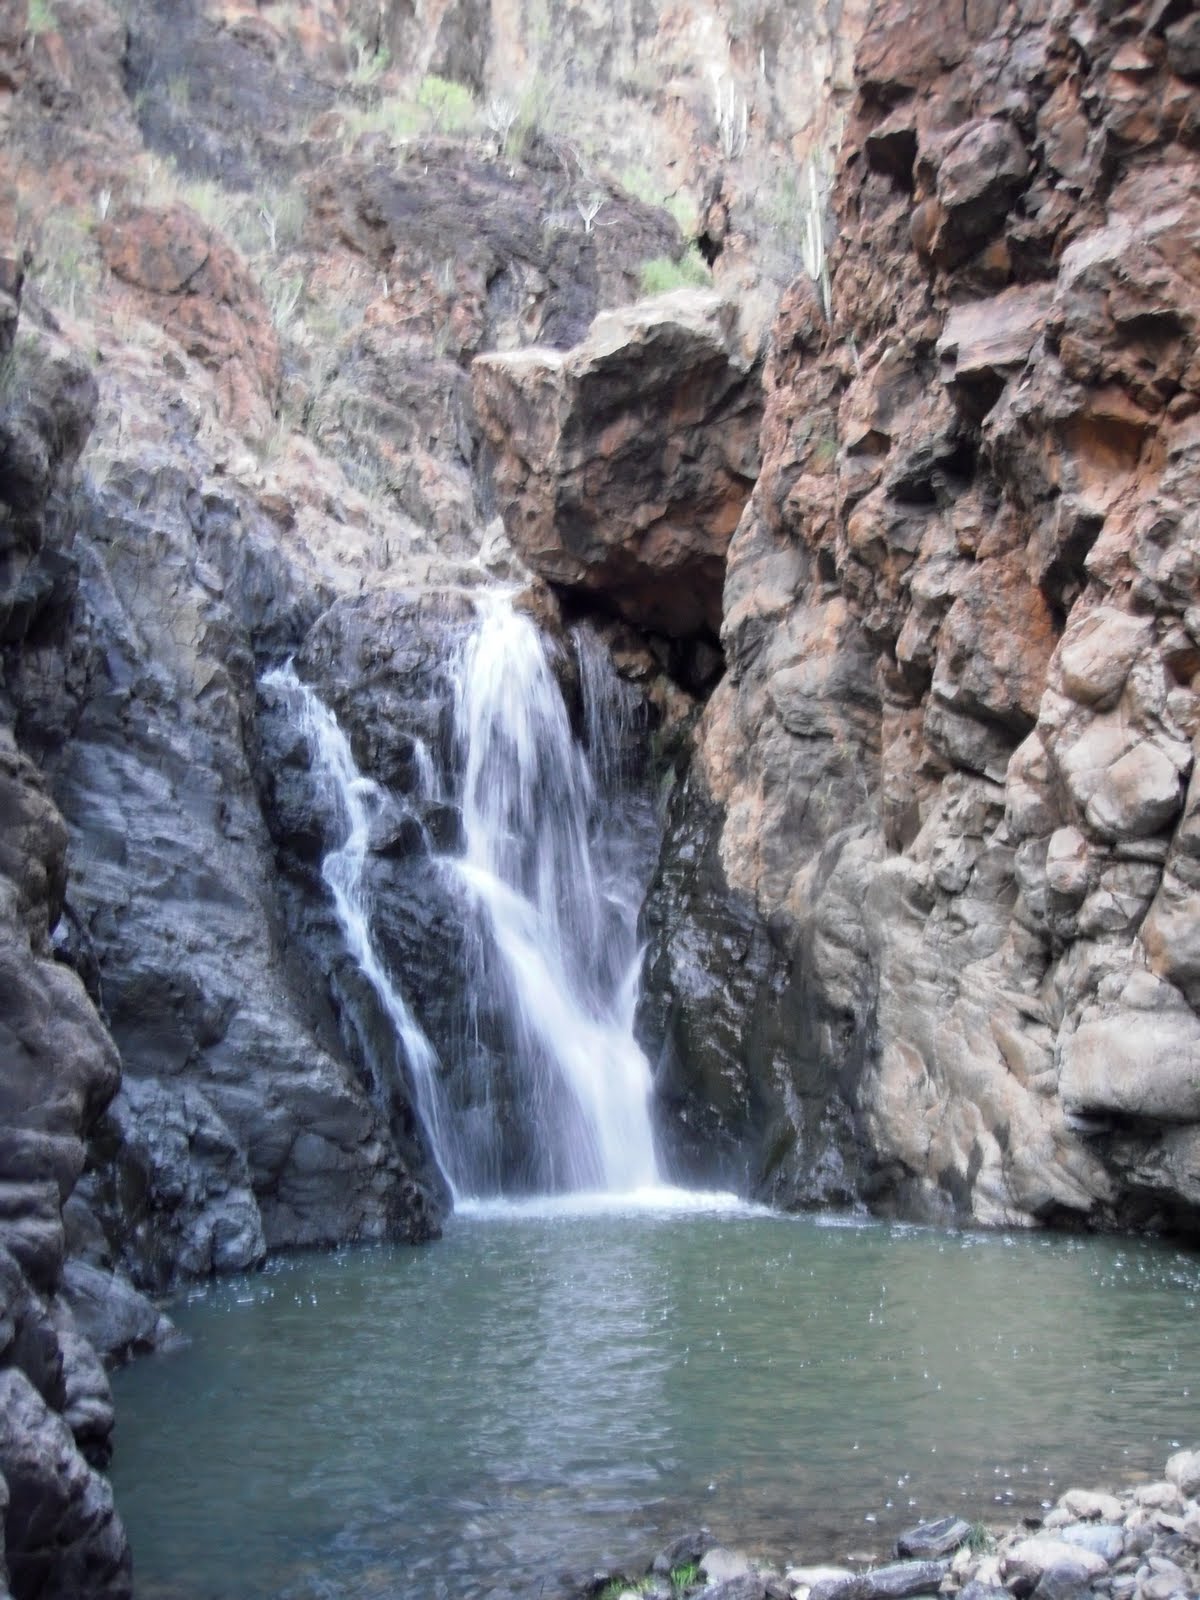 barranco del toro and waterfall ravine in gran canaria